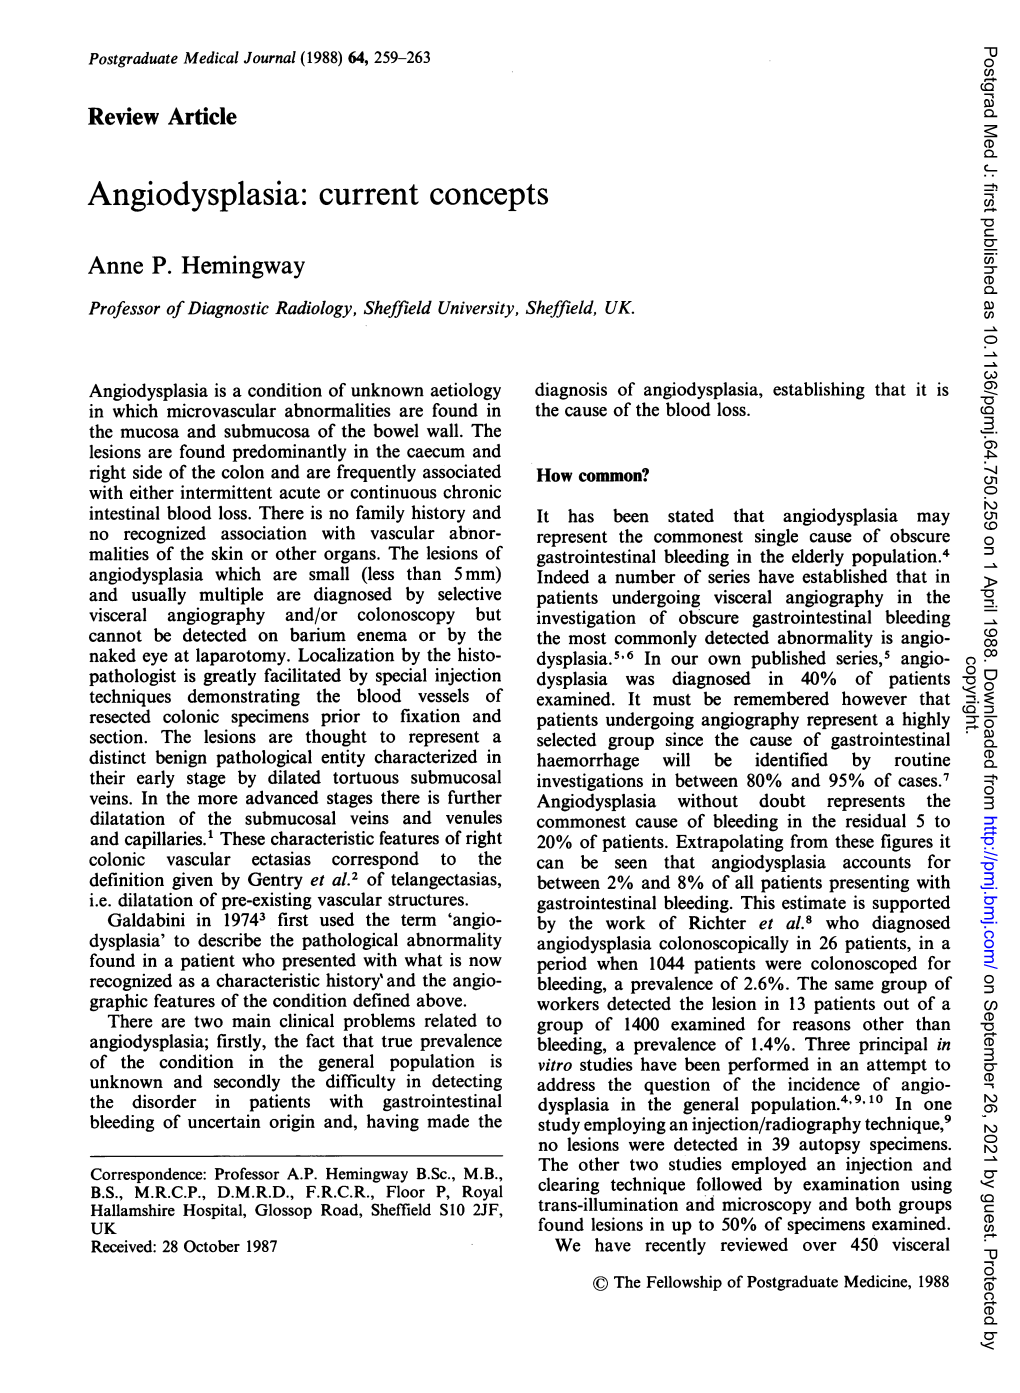 Angiodysplasia: Current Concepts